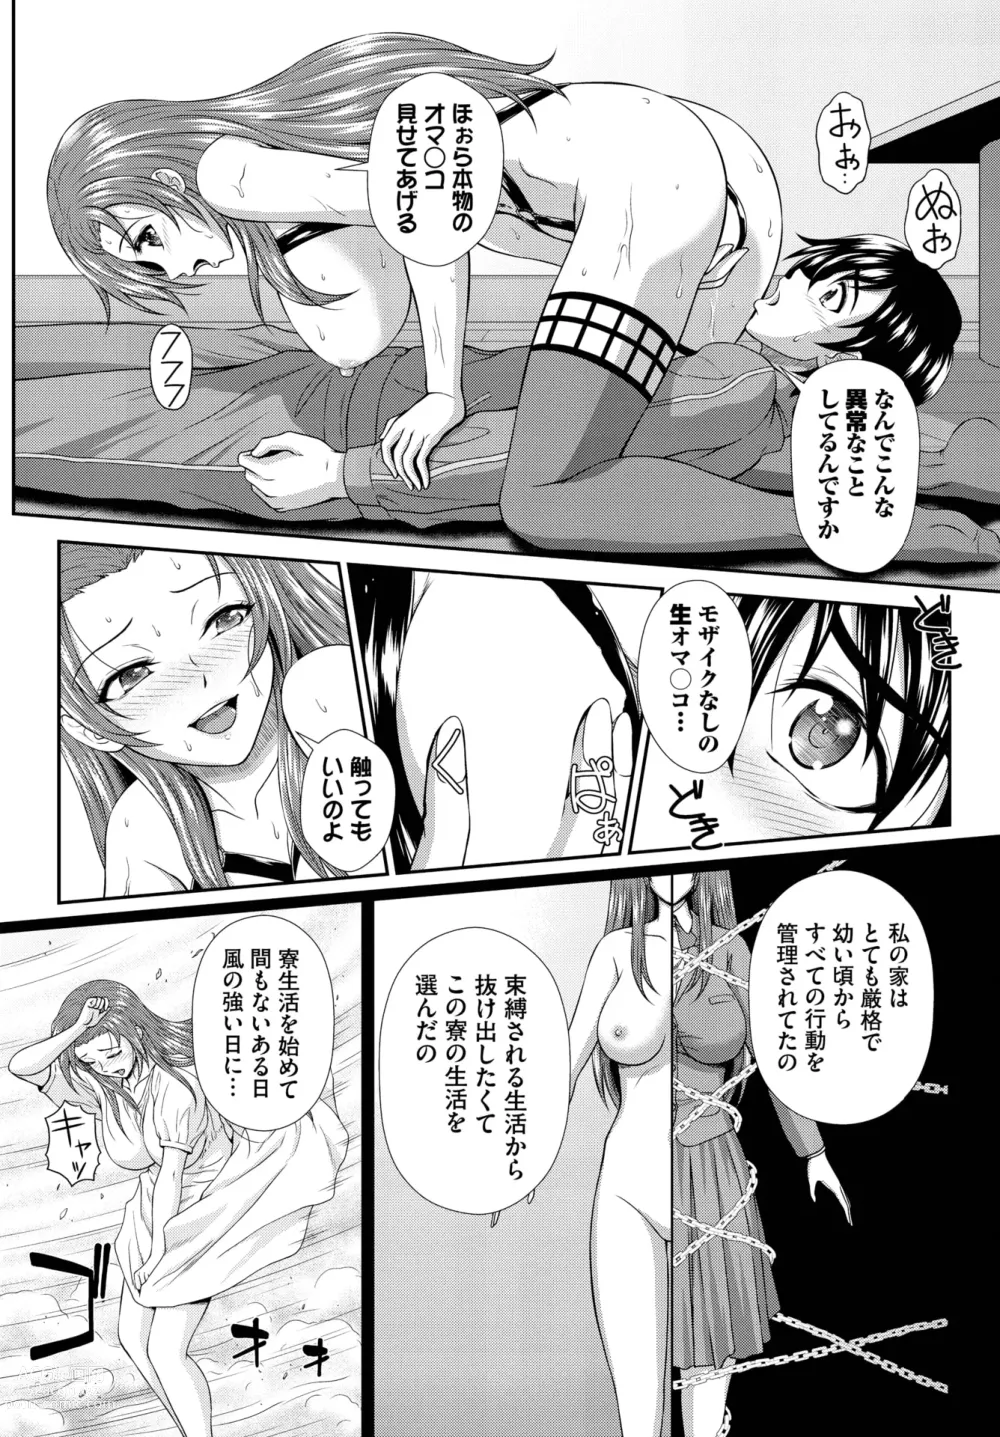 Page 230 of manga Dascomi Vol.25